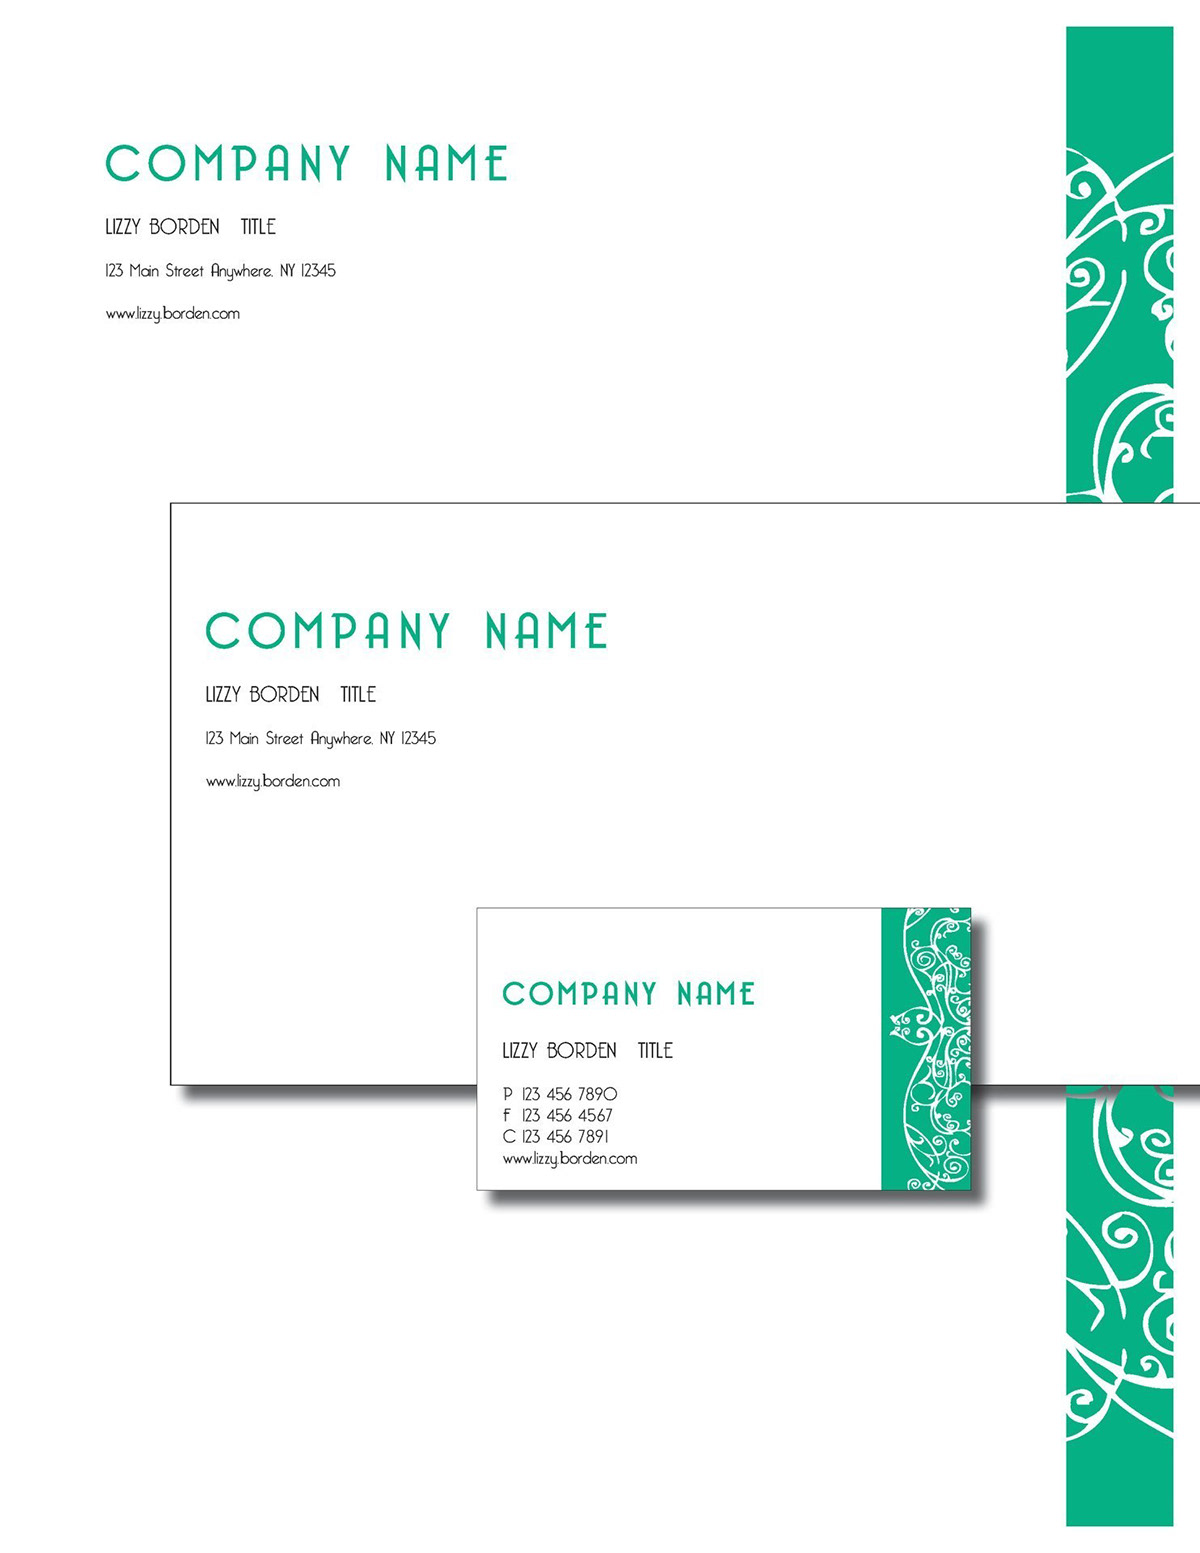 Production and Printing Martha Lynn Laskie Business Cards Website Design Presenation Stationery Invitation